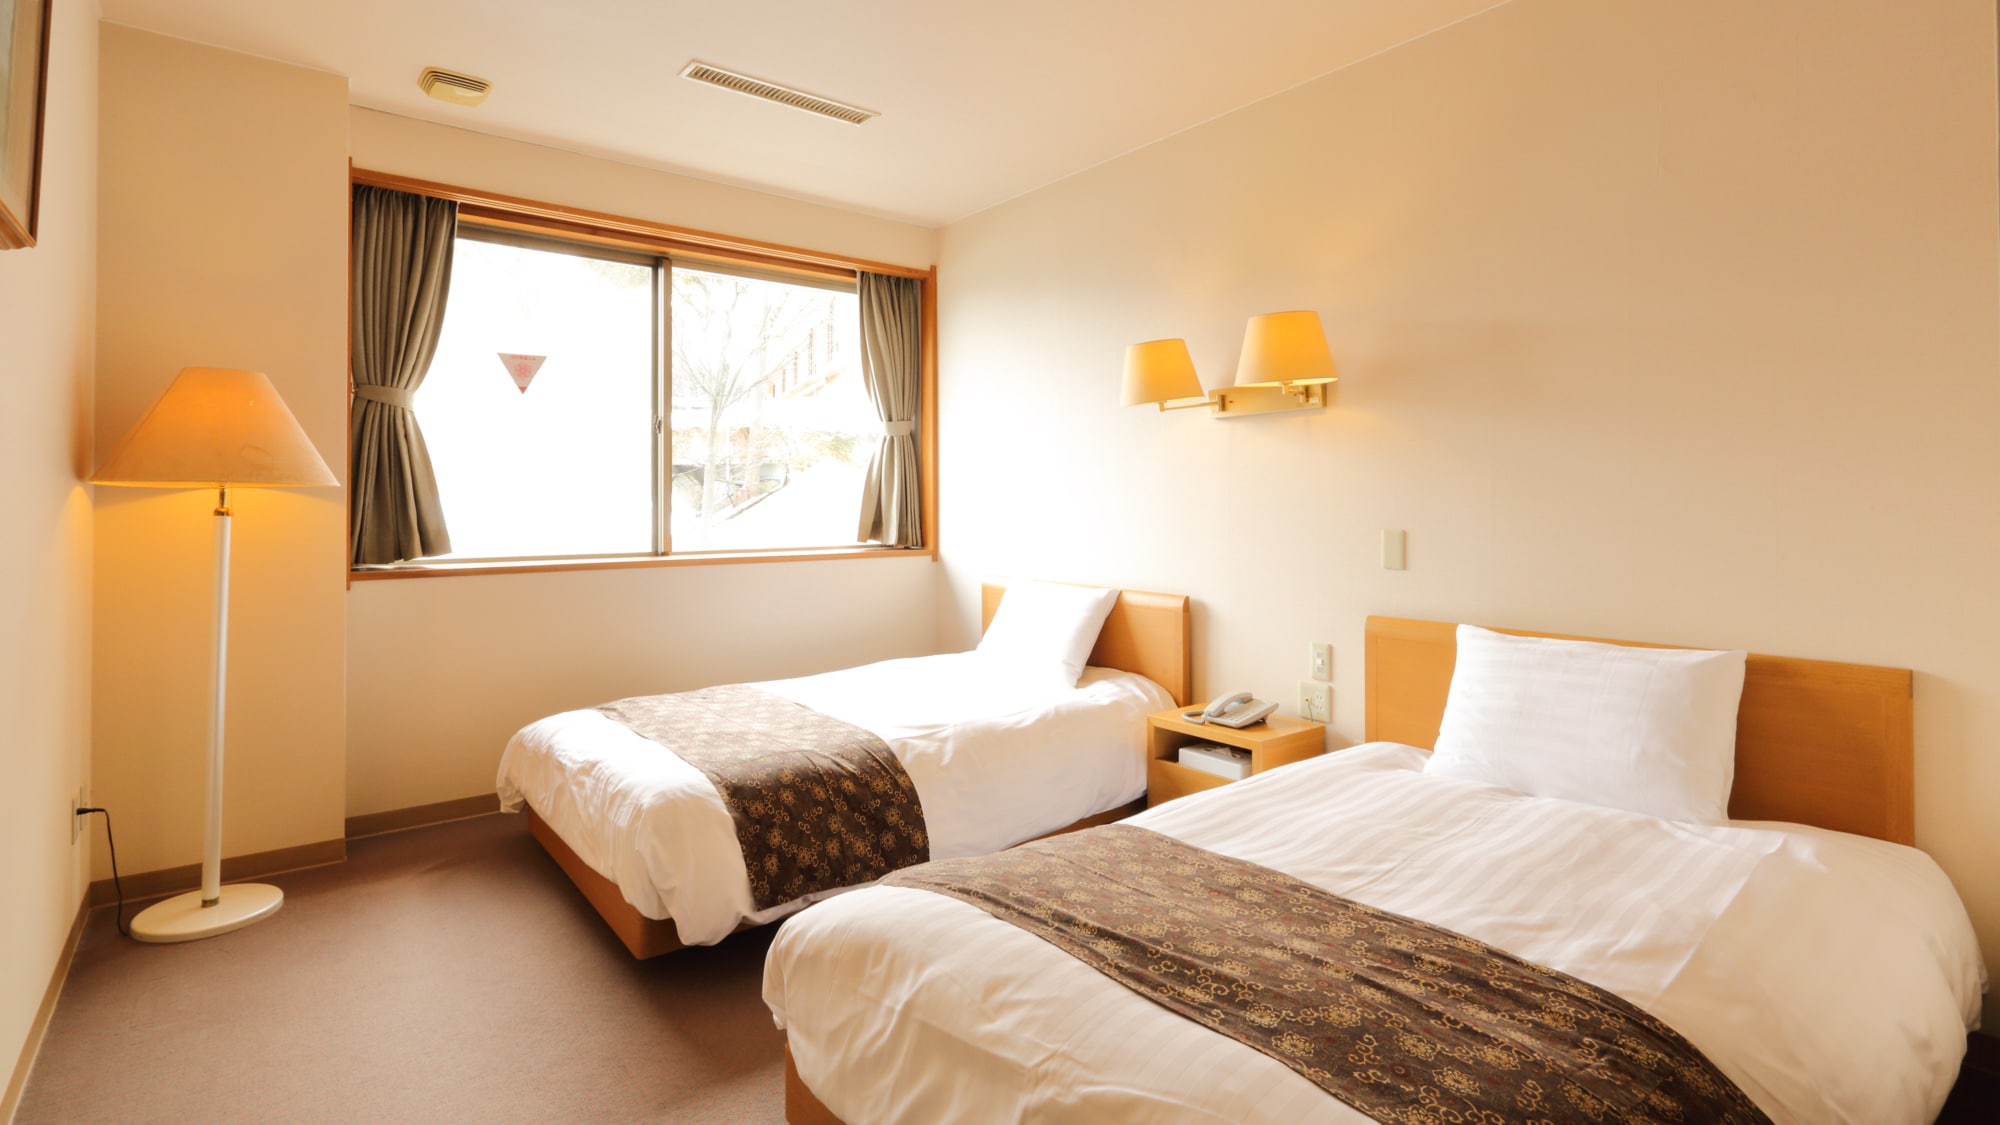 ・ Japanese-style room 10 tatami mats + Western-style room